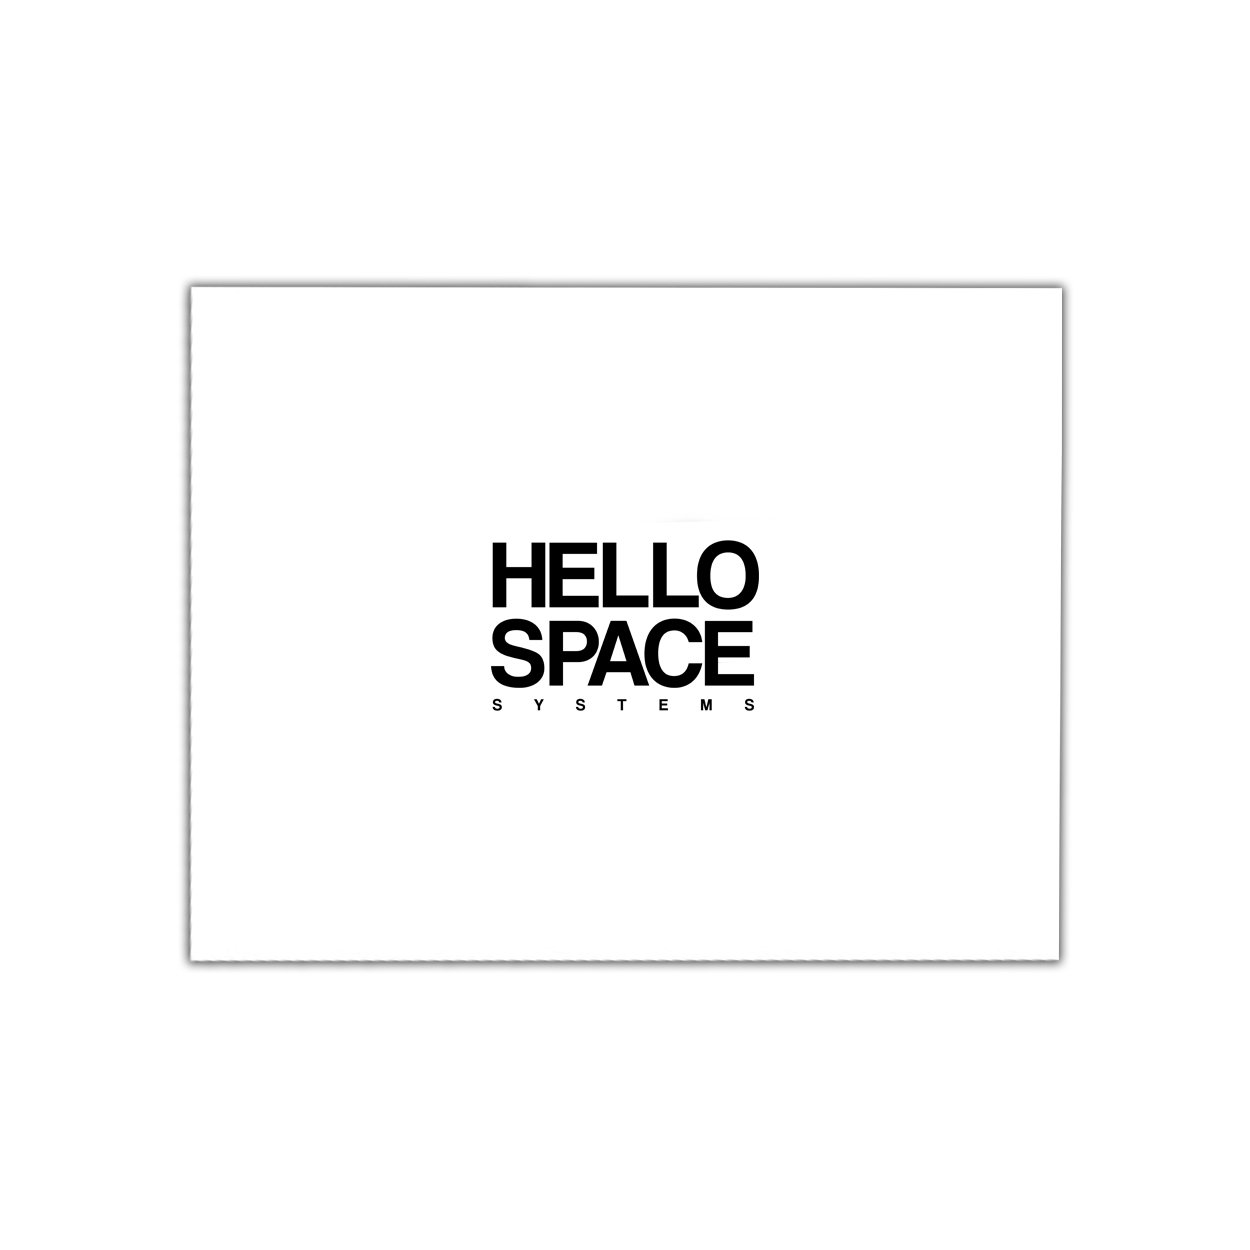 HELLO SPACE